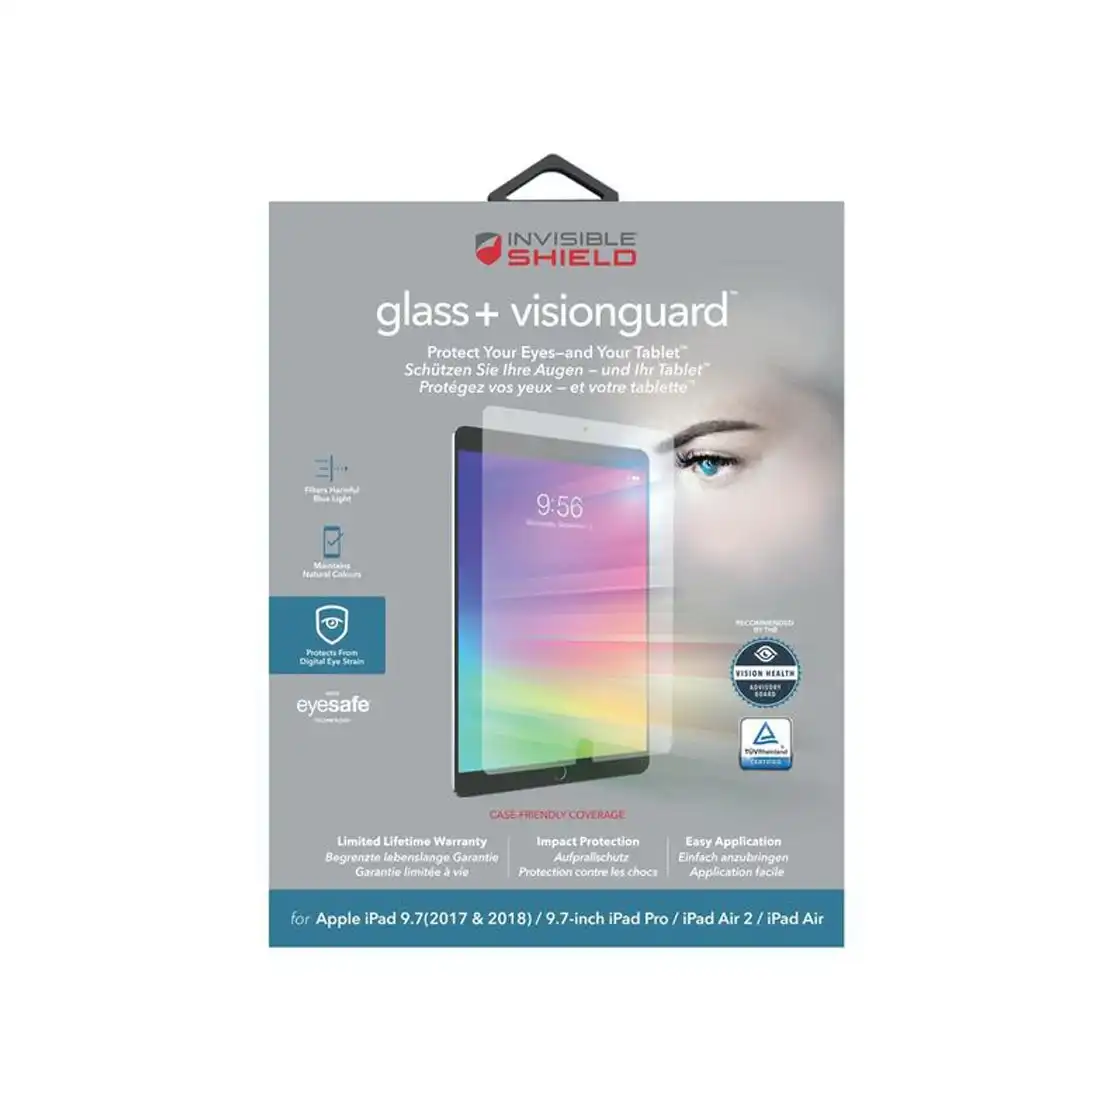 Zagg InvisibleShield Glass+ Visionguard Screen Protector for iPad Air/ Air 2/ iPad Pro 9.7 2017/18